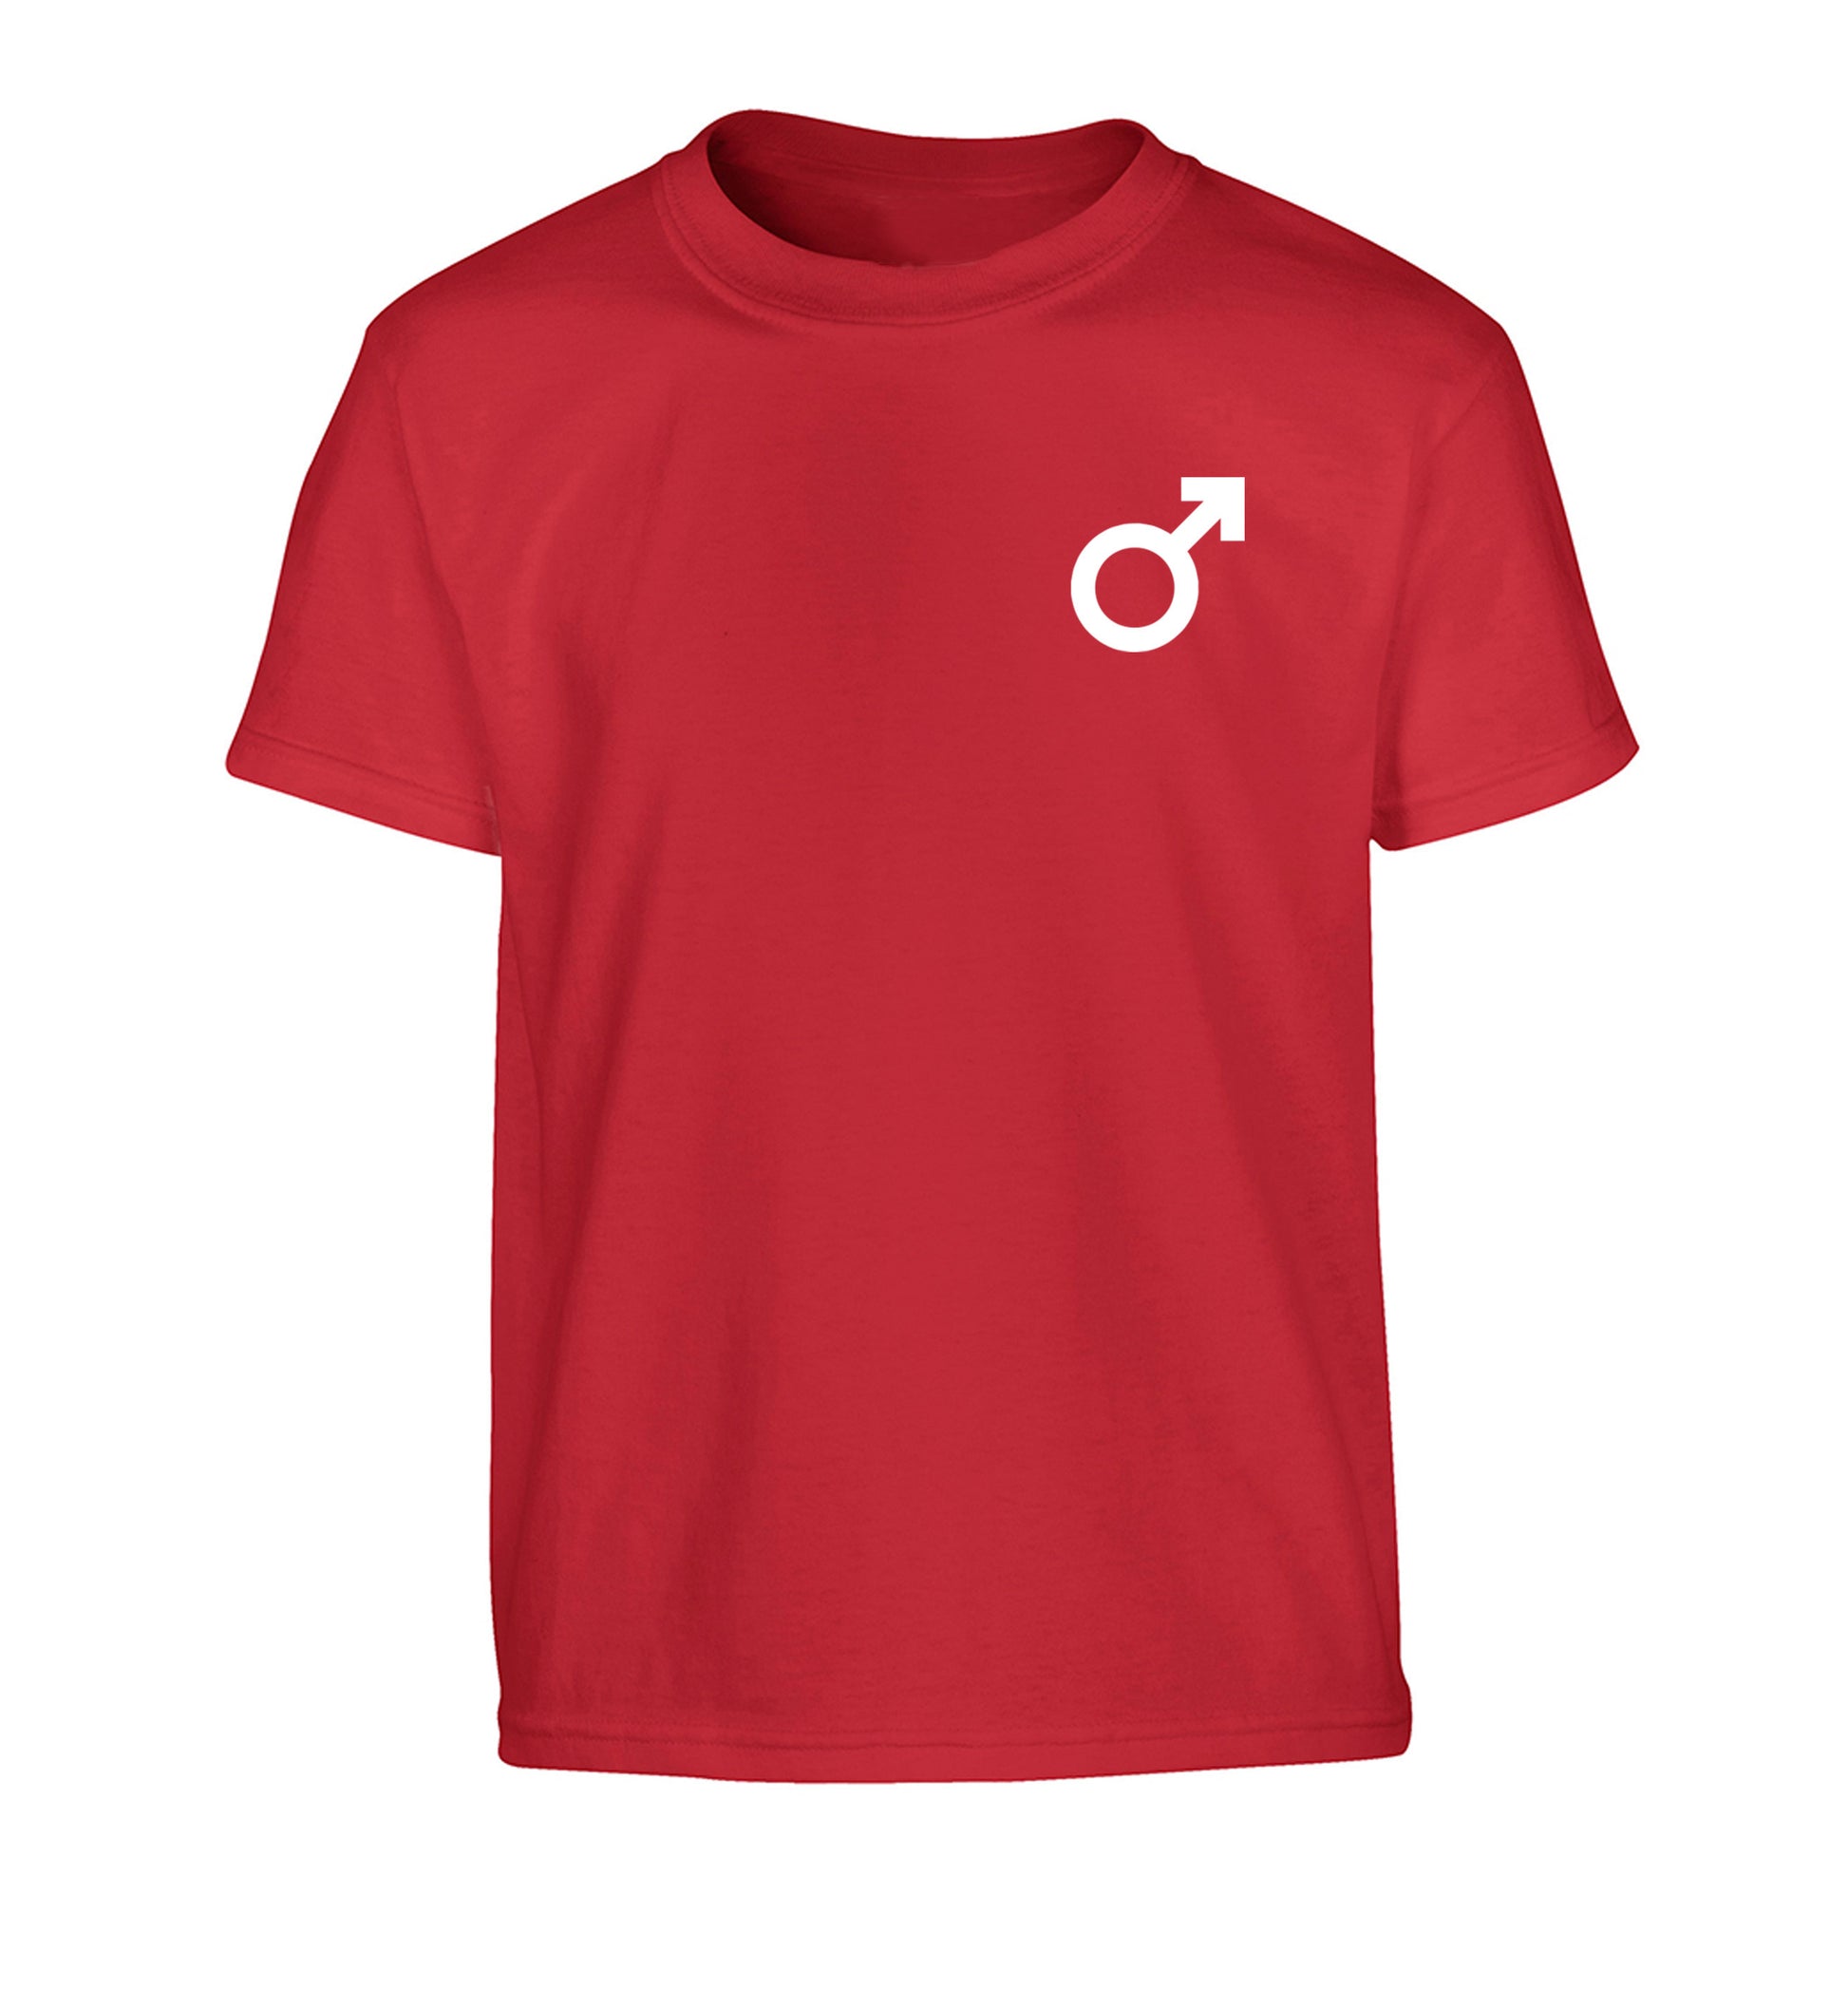 Male symbol pocket Children's red Tshirt 12-14 Years